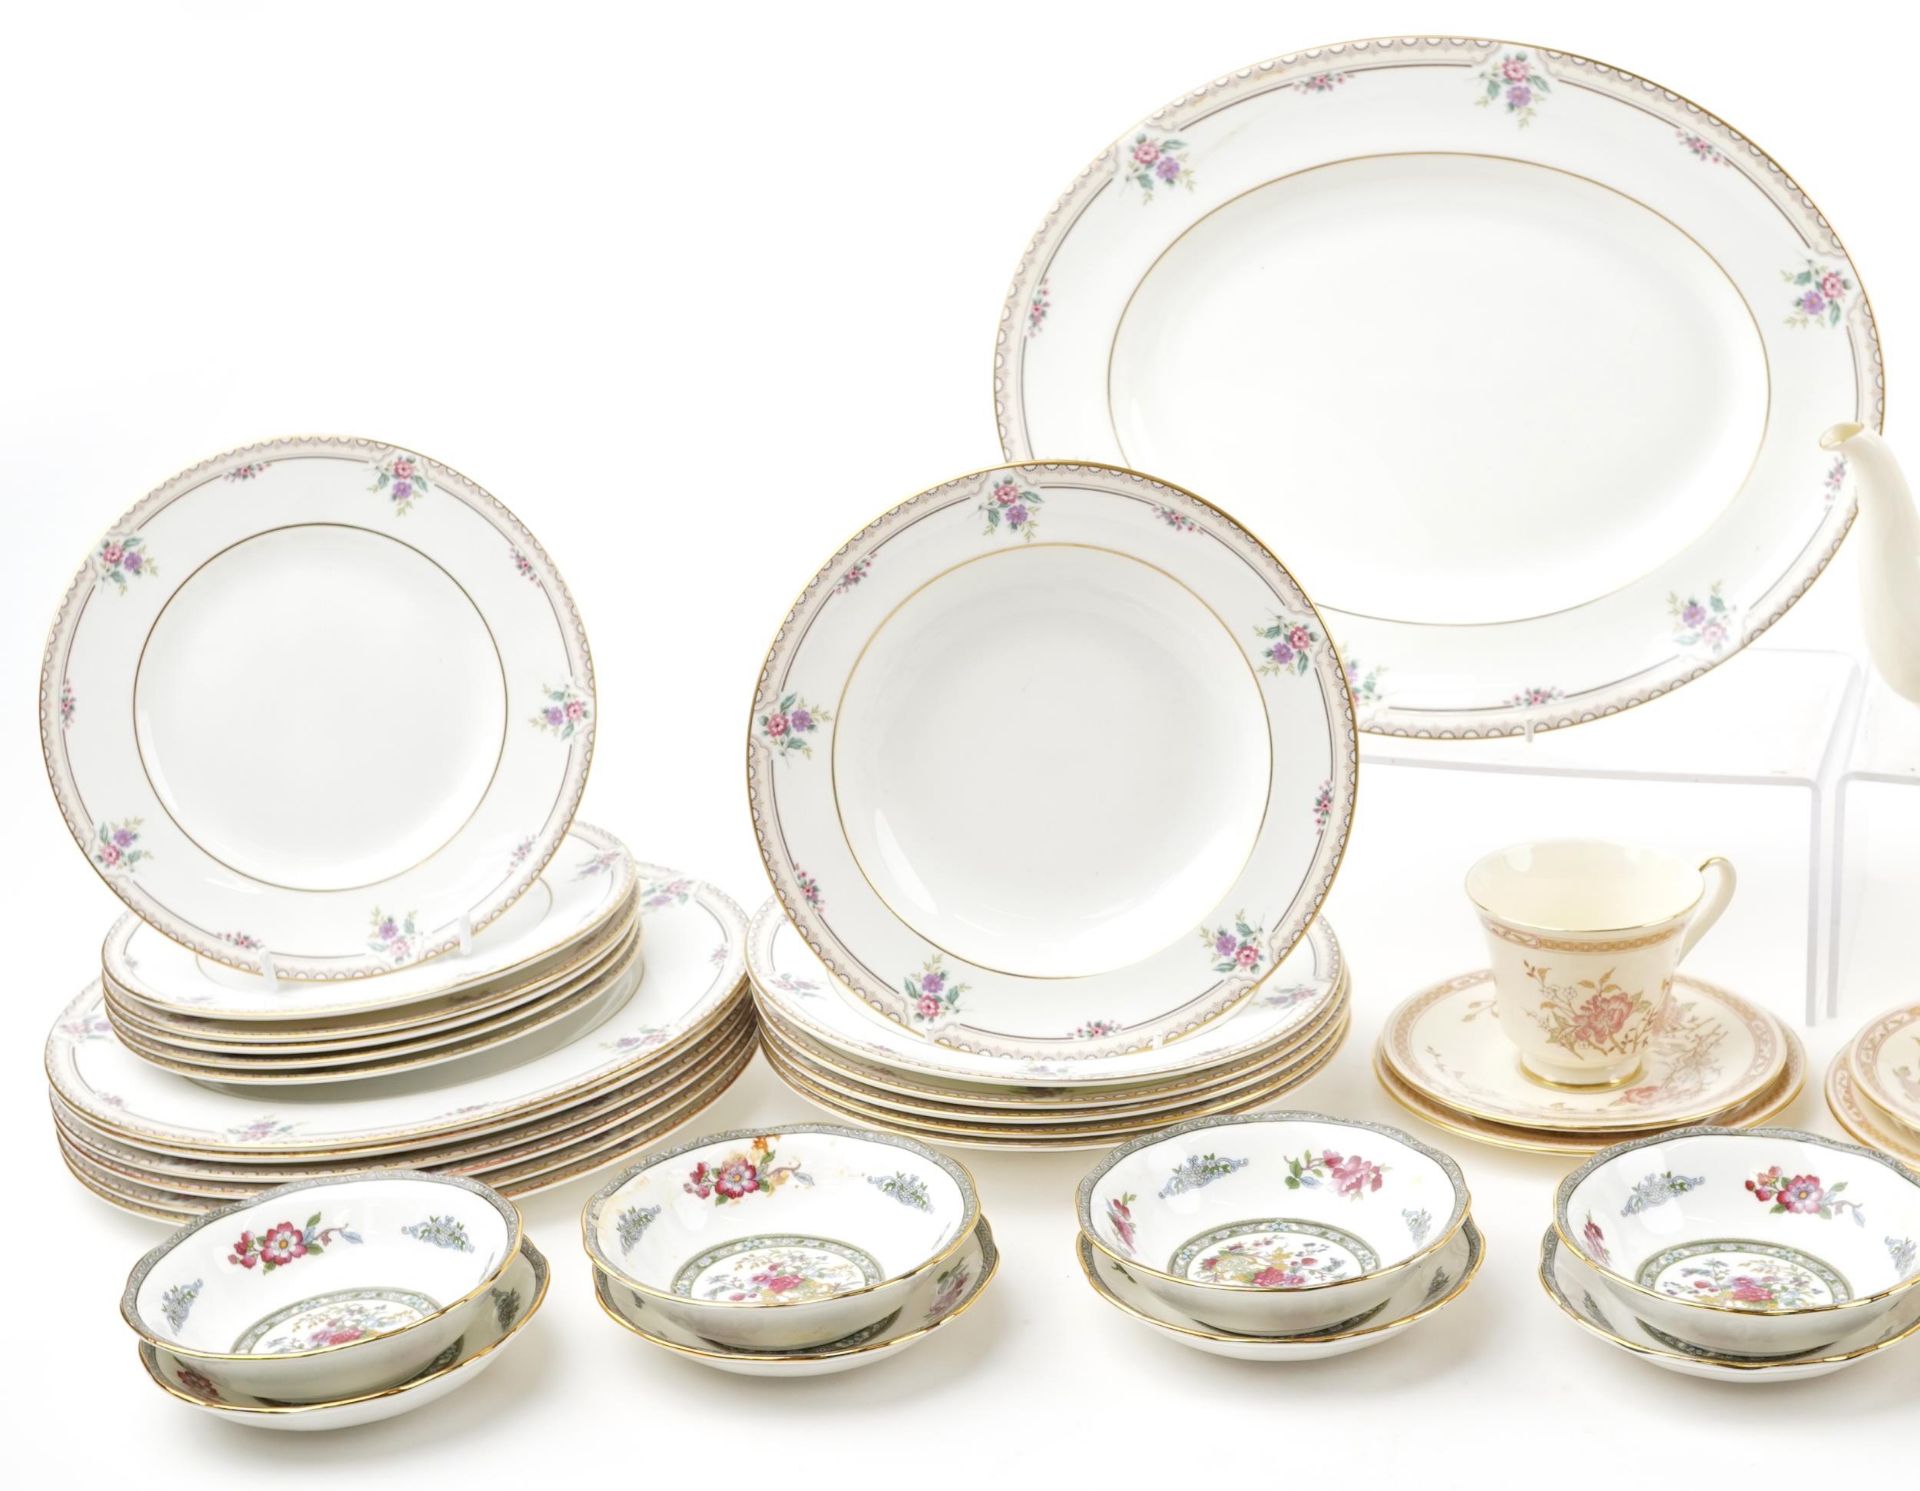 Tea and dinnerware including Royal Albert Tree of Kashmir and Royal Doulton Lisette - Image 2 of 6